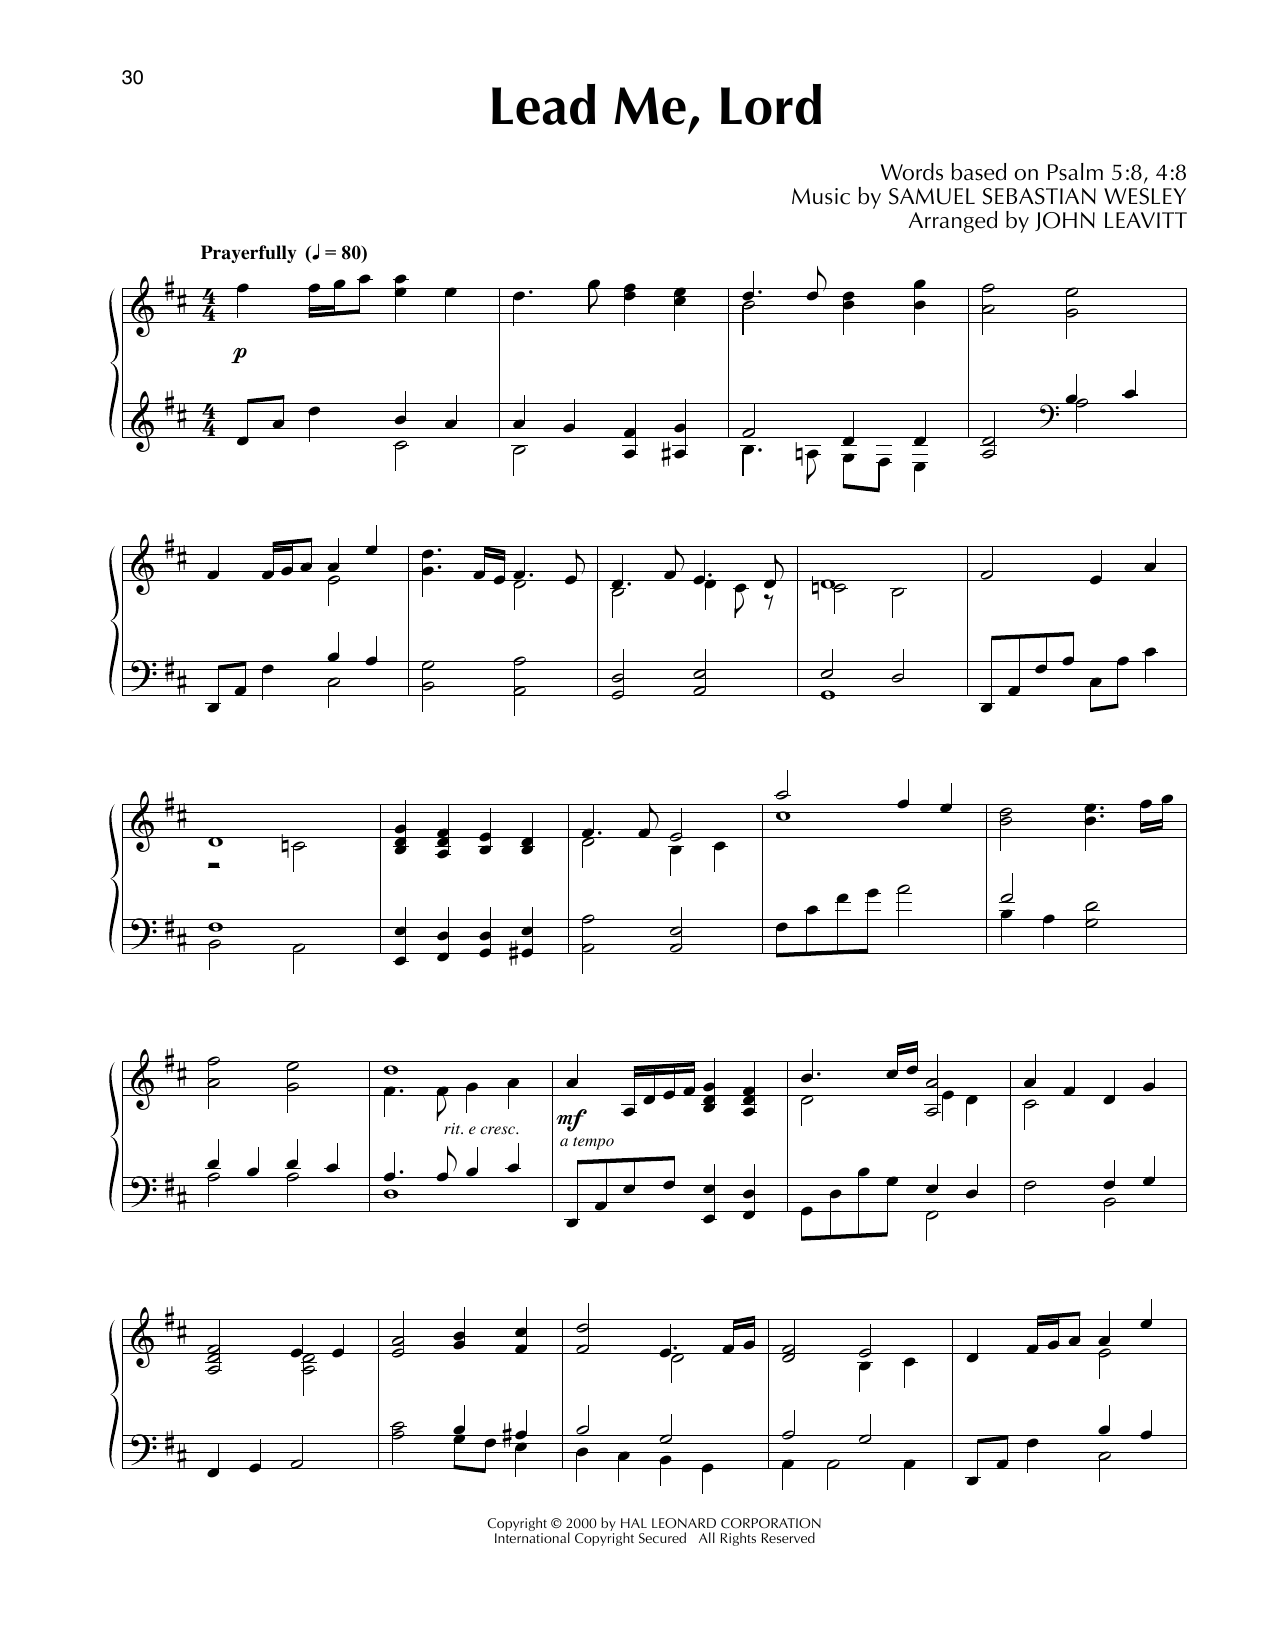 Samuel Sebastian Wesley Lead Me, Lord (arr. John Leavitt) Sheet Music Notes & Chords for Piano Solo - Download or Print PDF